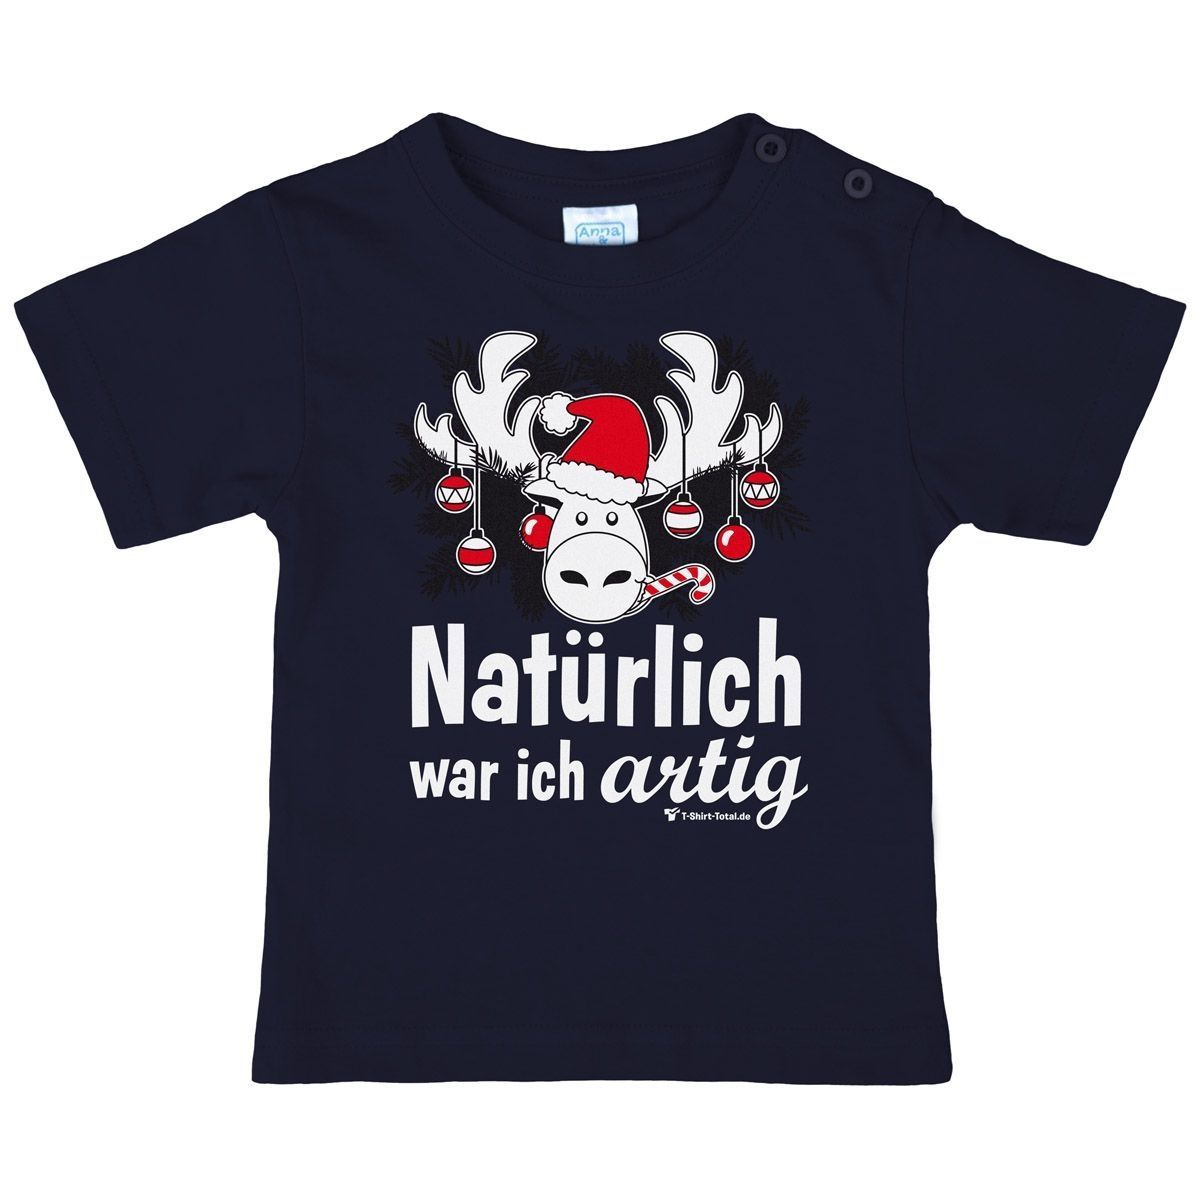 Natürlich artig Kinder T-Shirt navy 104